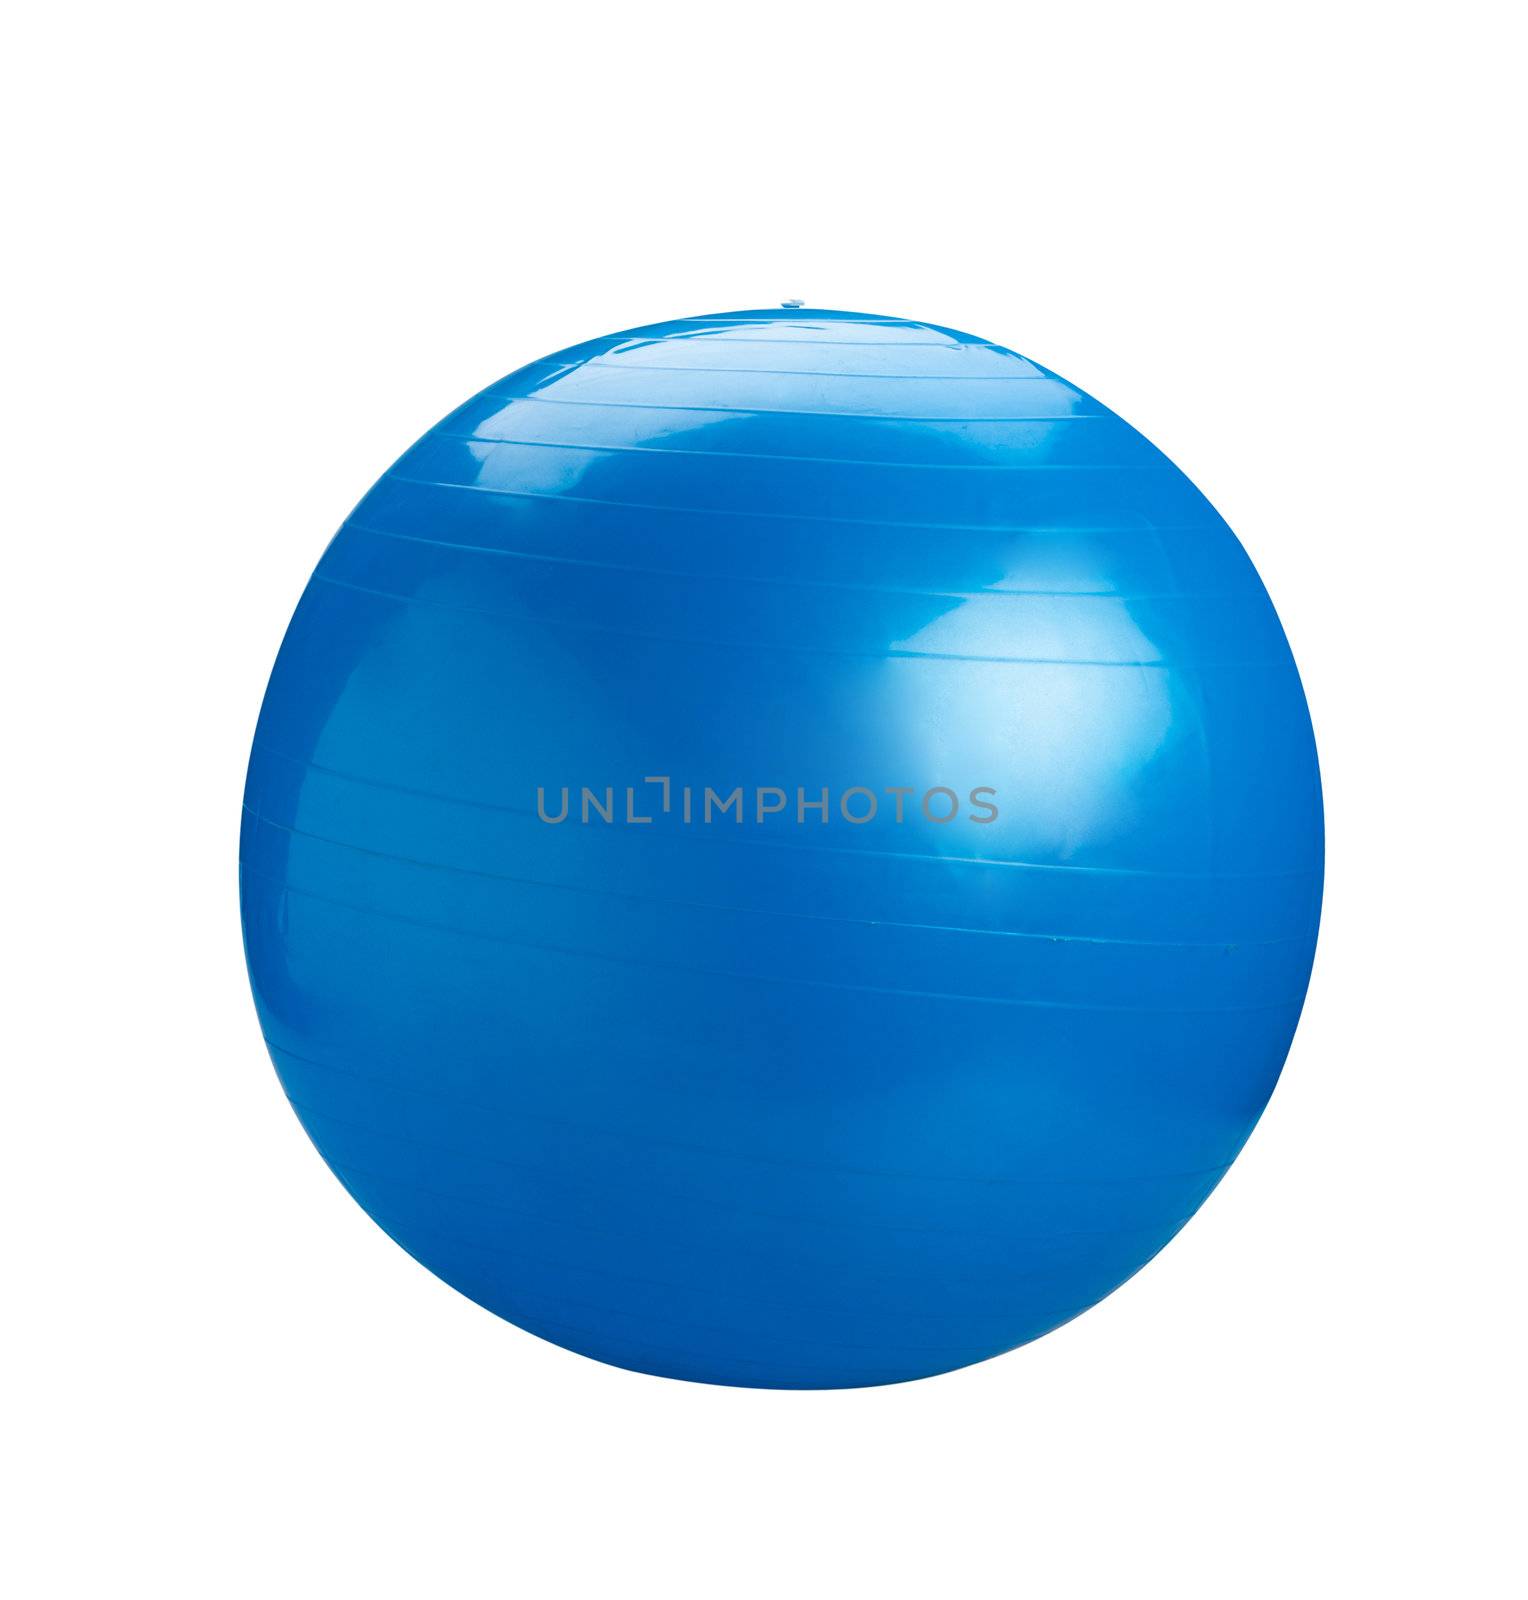 Blue gyms ball or yoga ball isolated  by john_kasawa